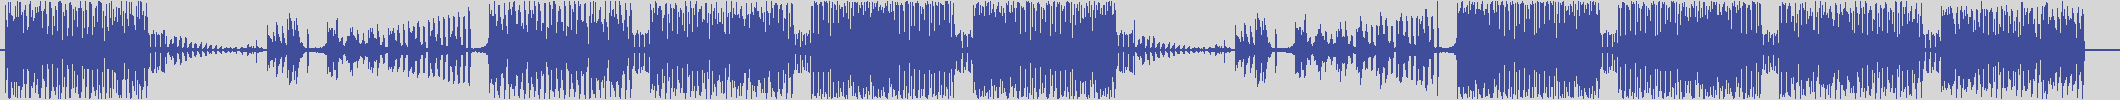 nf_boyz_records [NFY076] Last Reaction - Tahann [Grand Hotel's Deephouse Mix] audio wave form